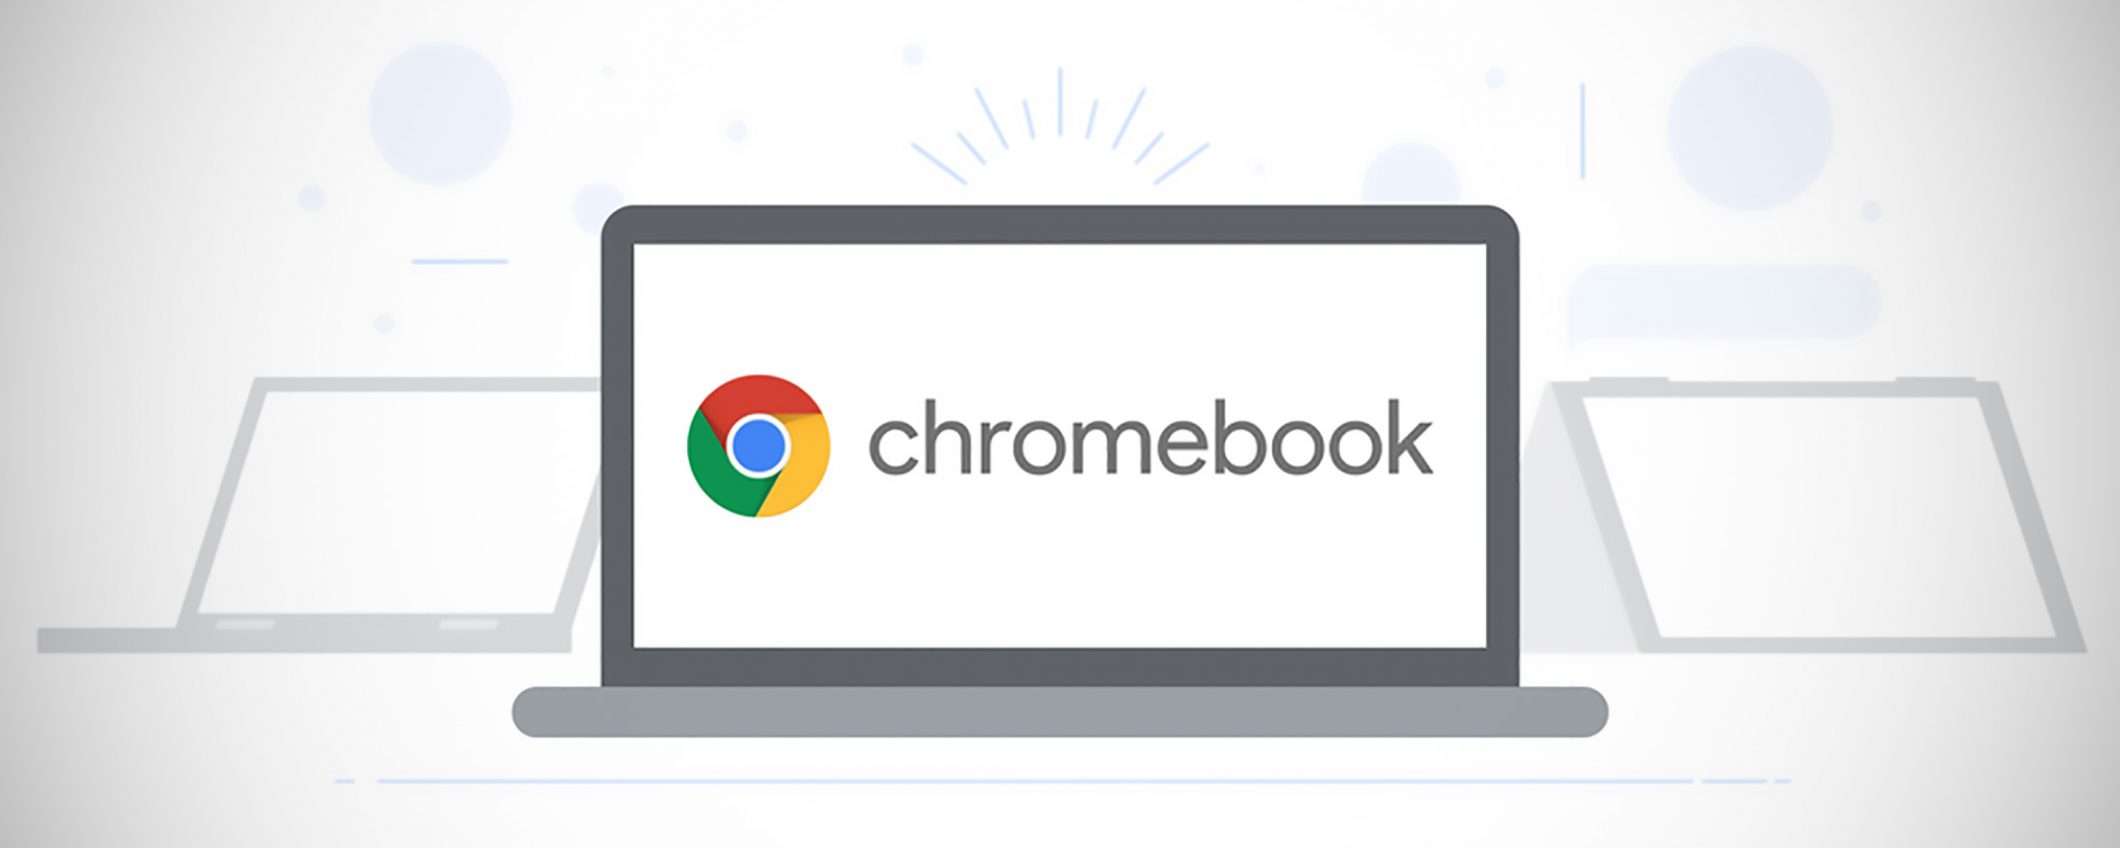 Chrome OS 79: le novità per i Chromebook